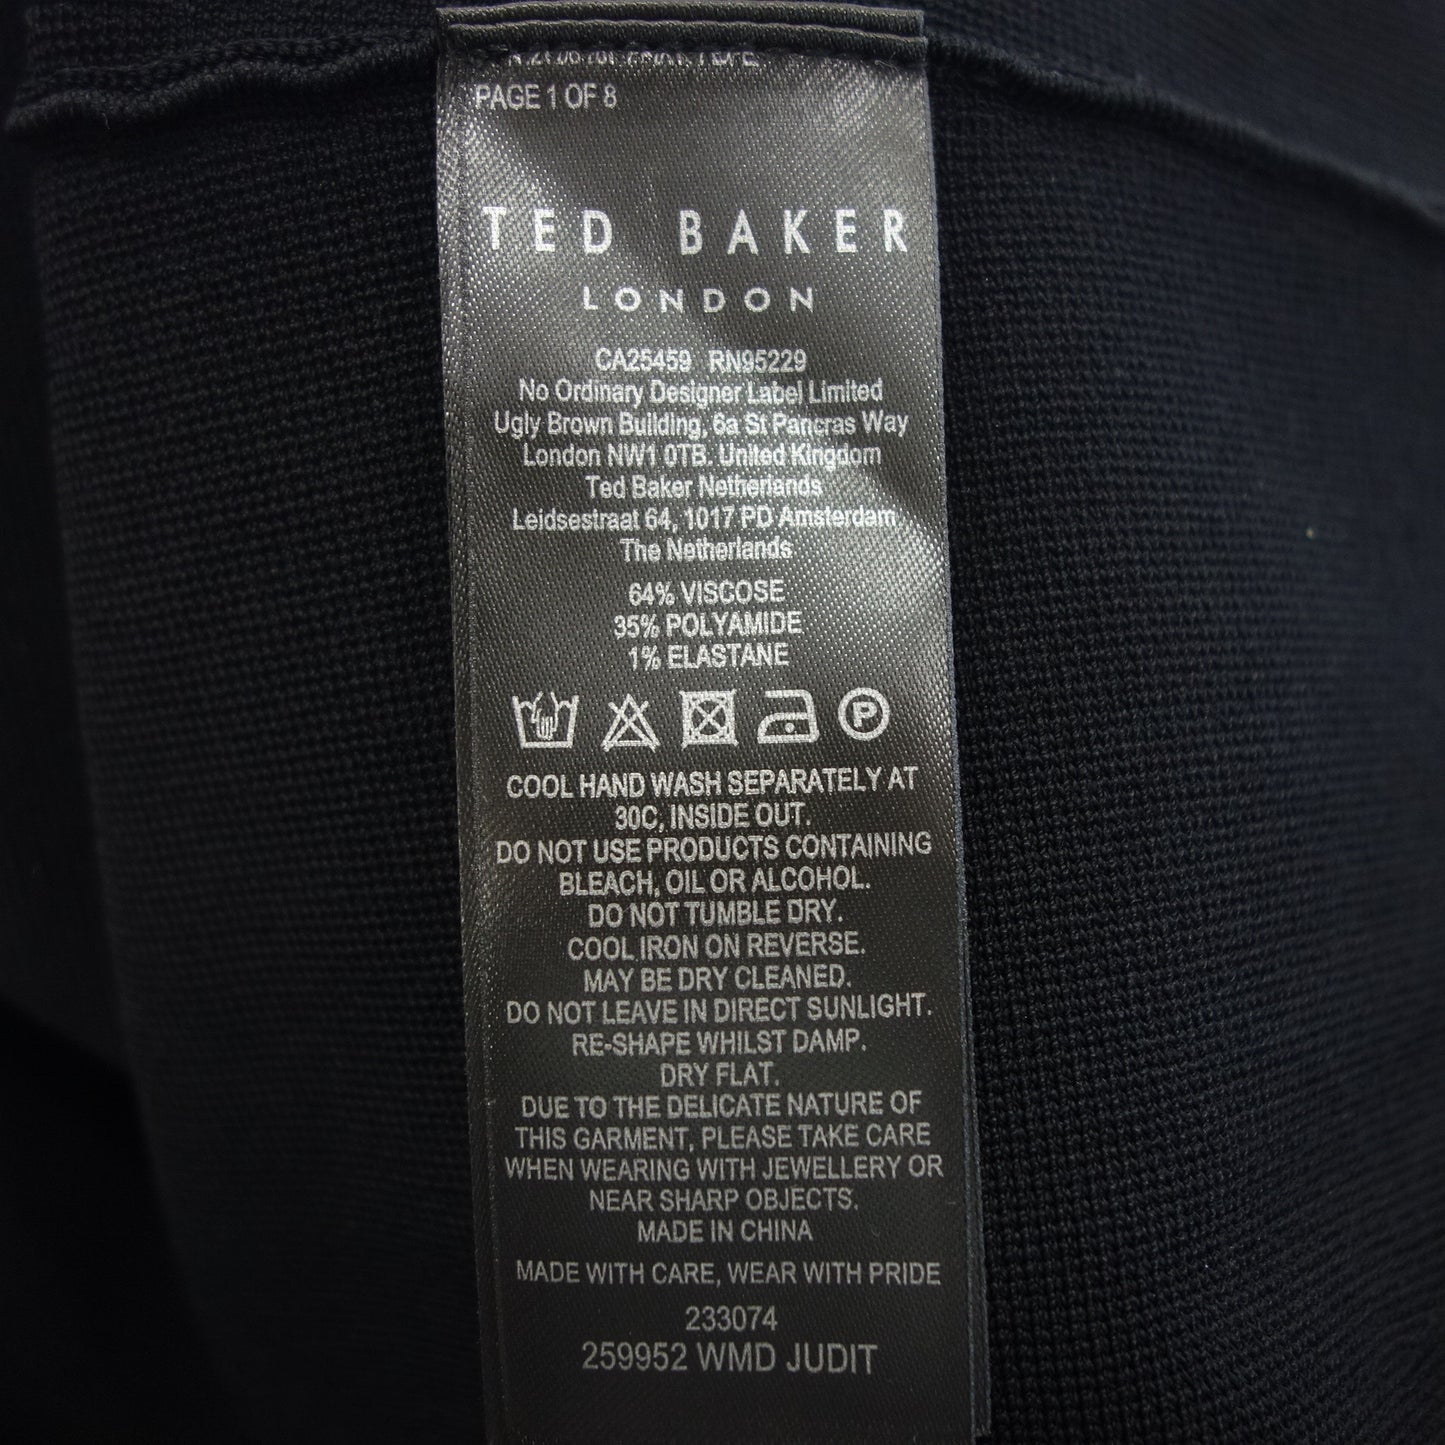 Ted Baker London 无袖连衣裙 女式 黑色 0 TED BAKER LONDON [AFB21] [二手] 